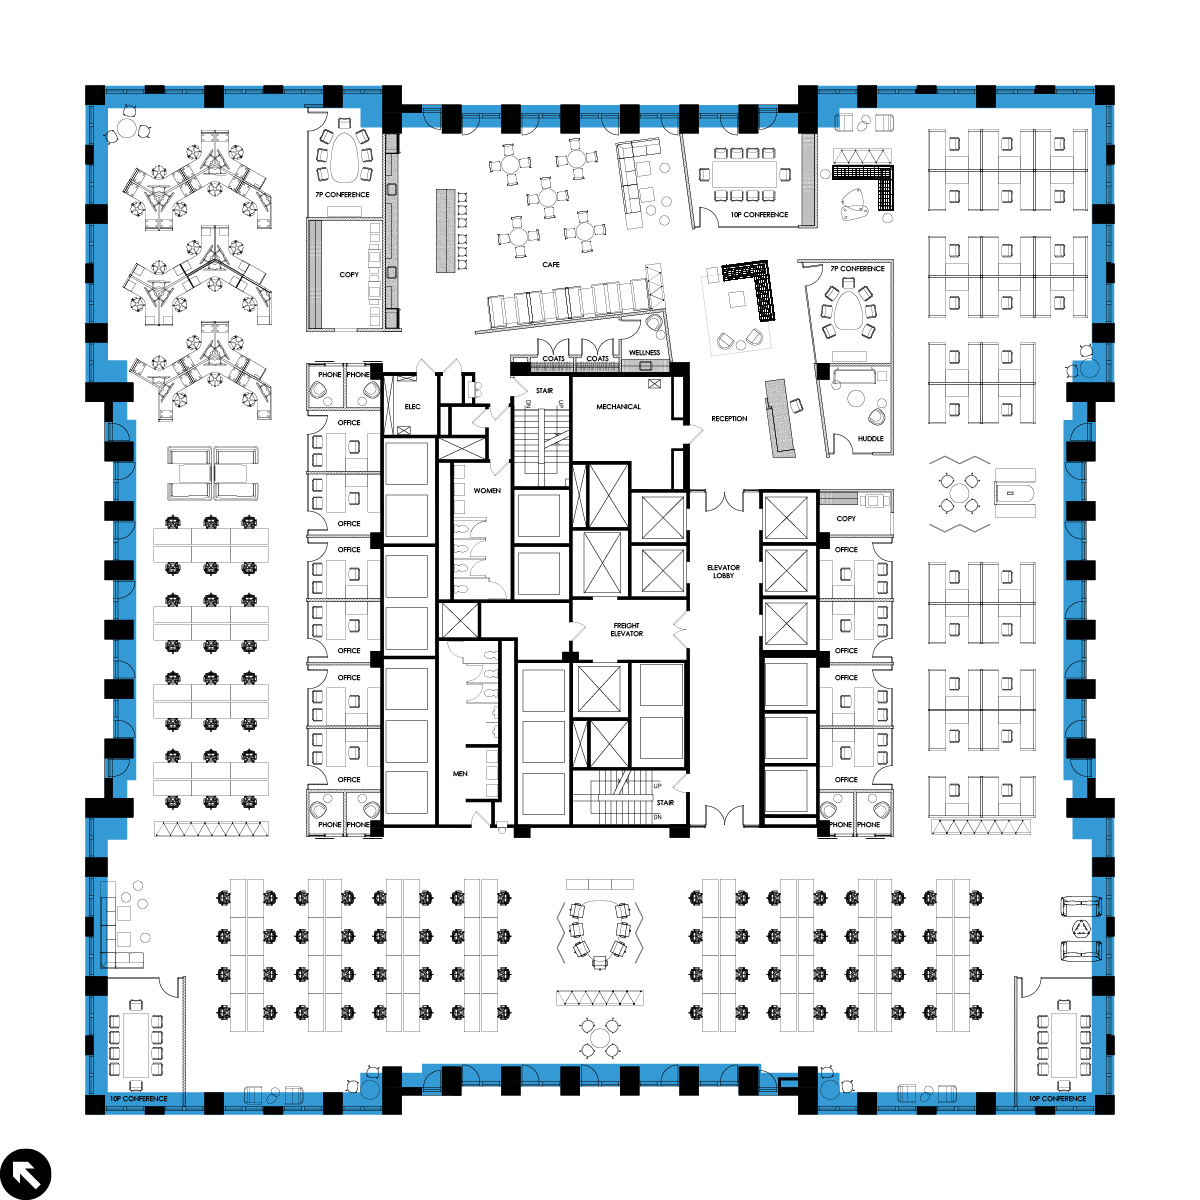 Proposed Open Layout Floorplan